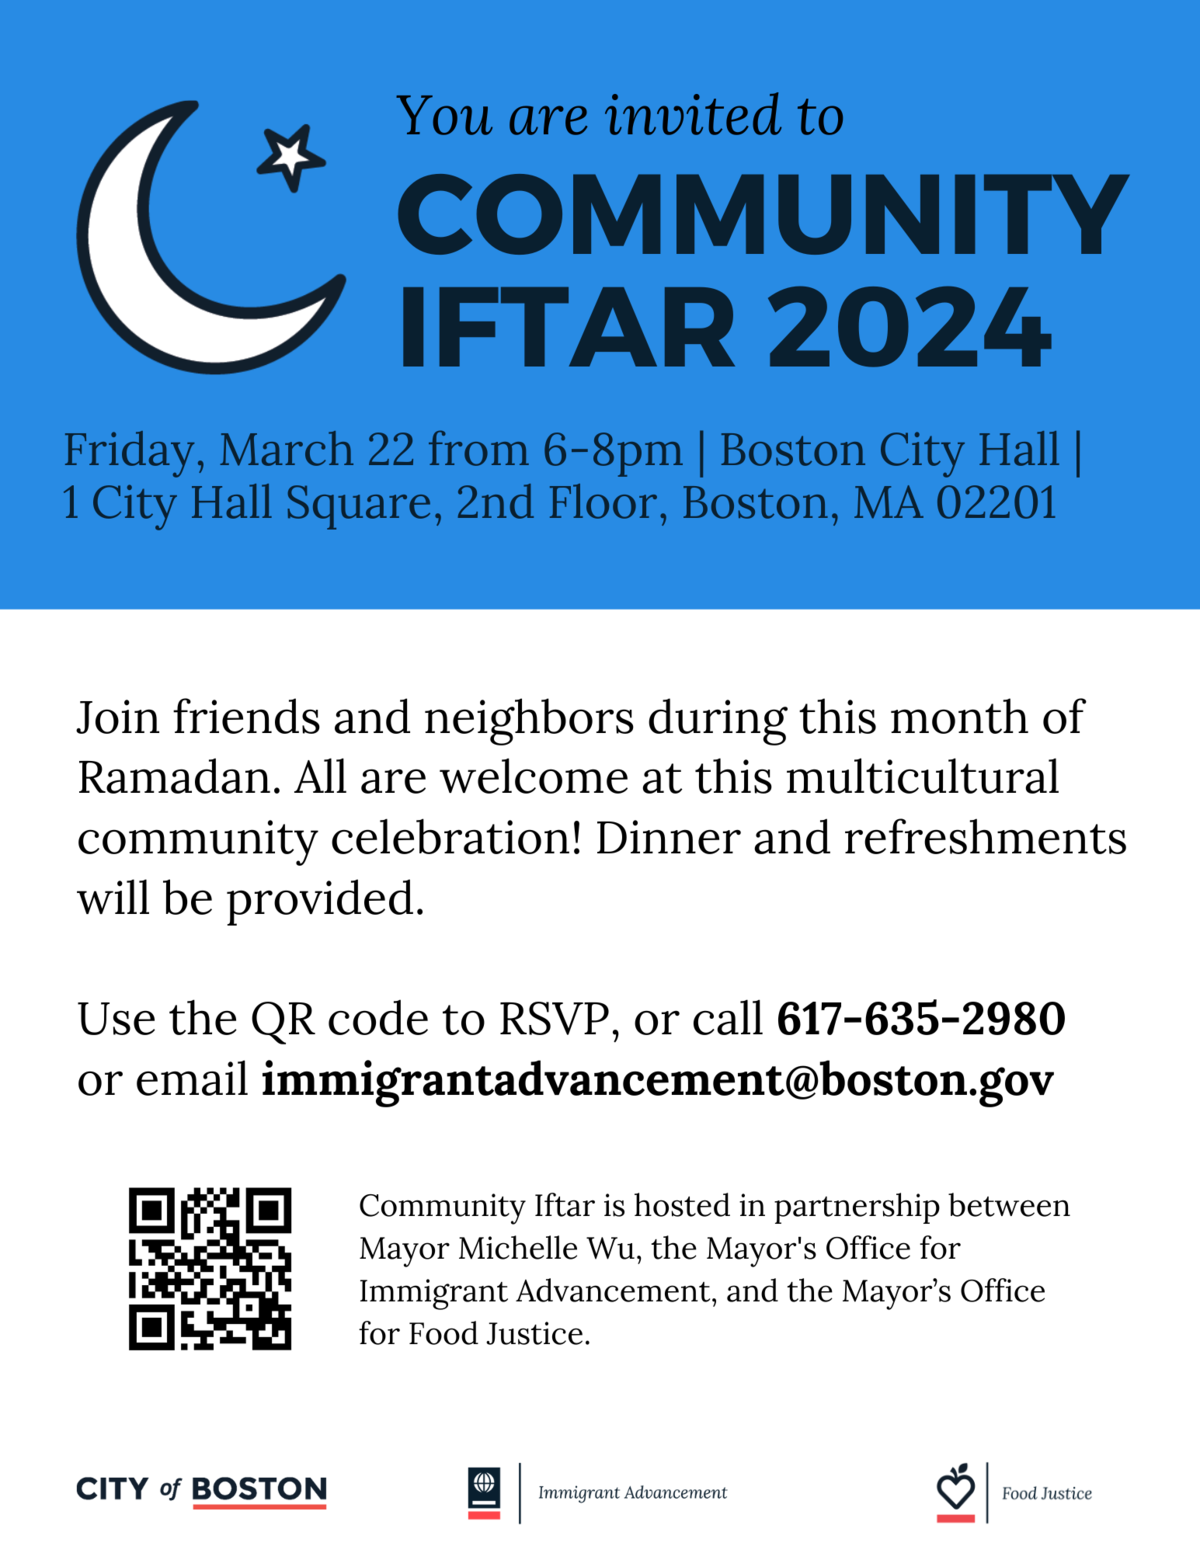 Community Iftar 2024 Flyer in English